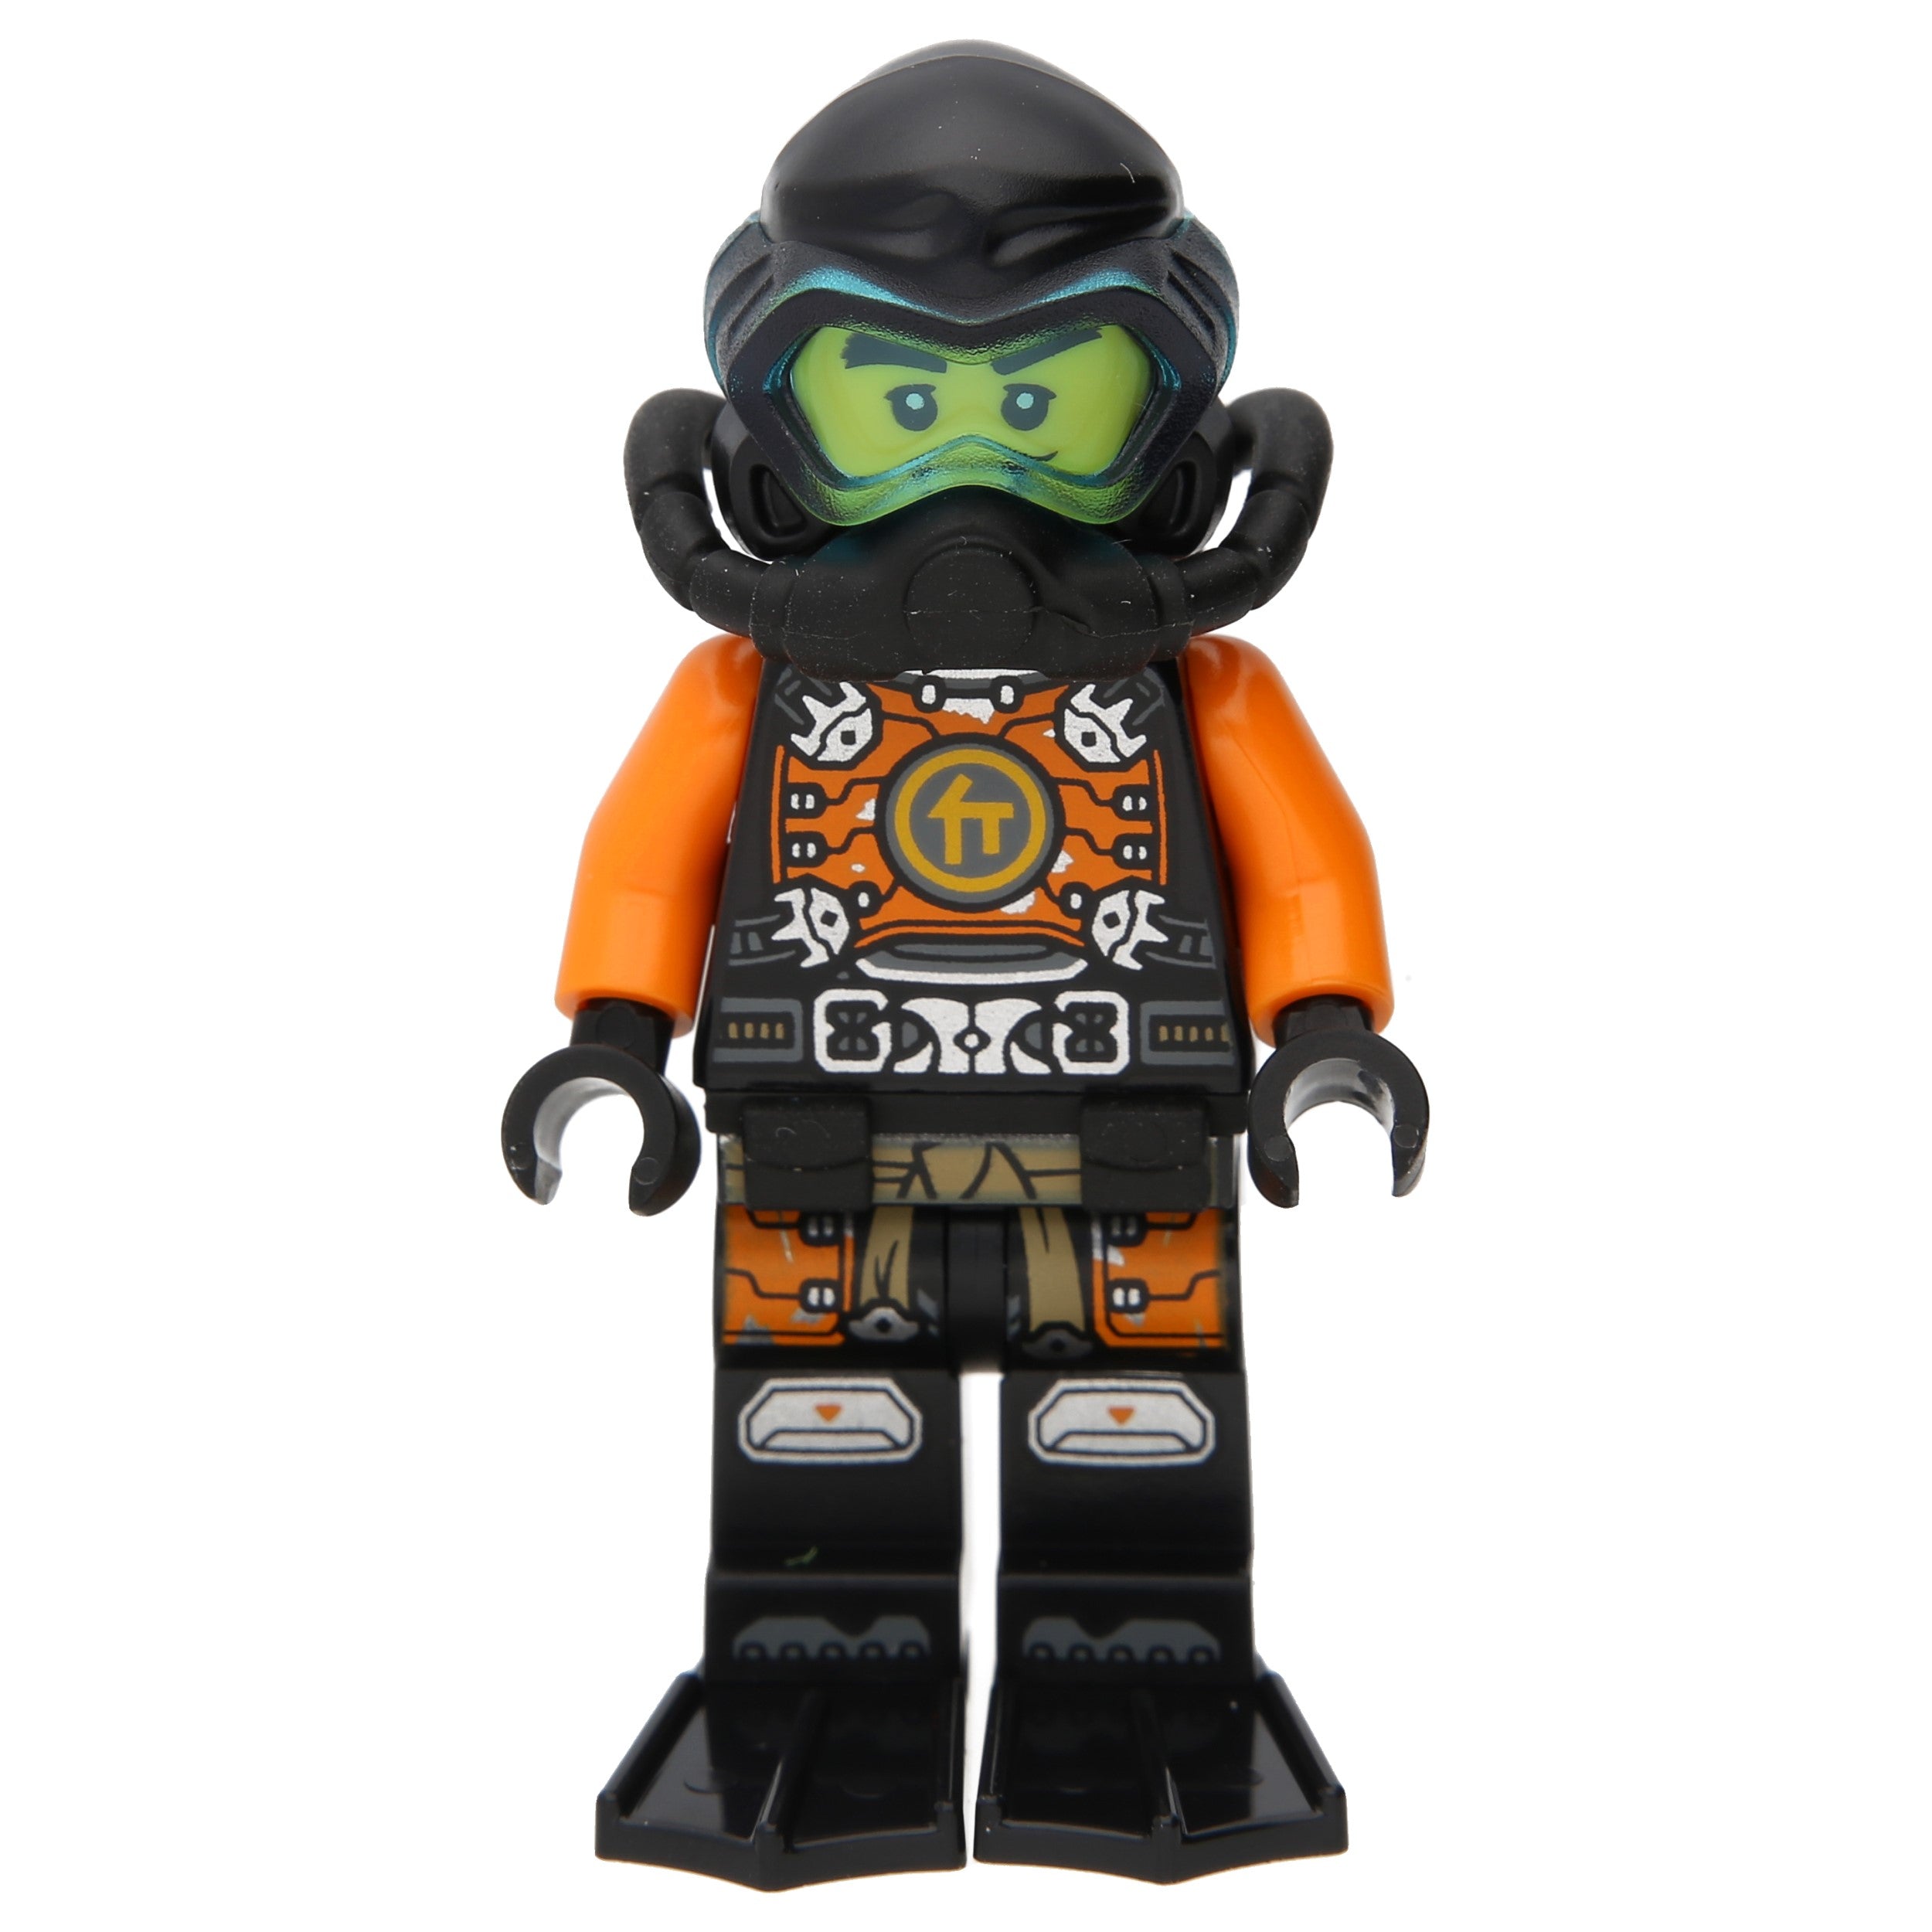 LEGO Ninjago Minifigures - Cole in a diving suit (secret of depth)